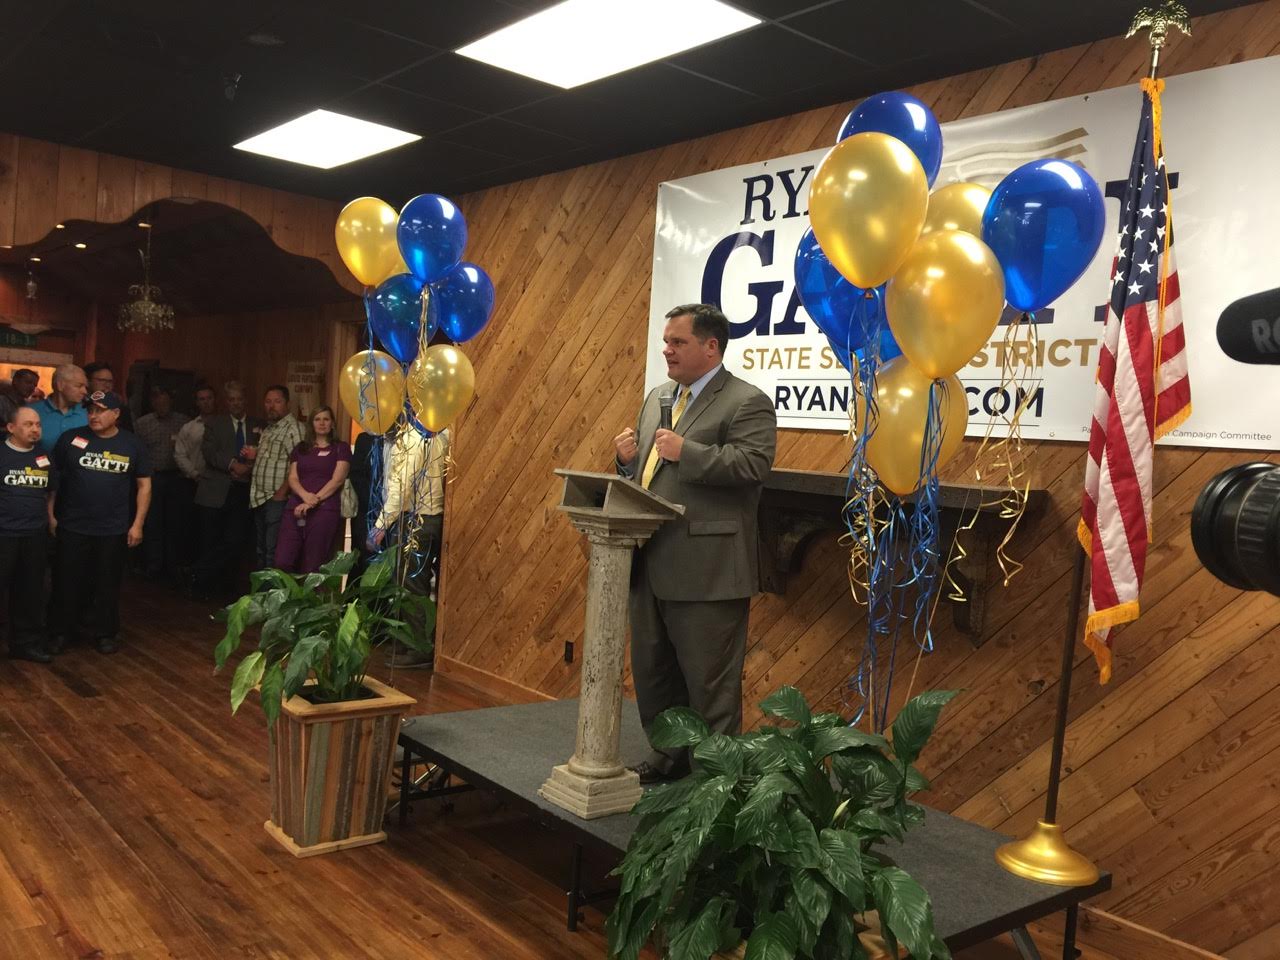 Ryan Gatti Announces Candidacy for State Senate District 36